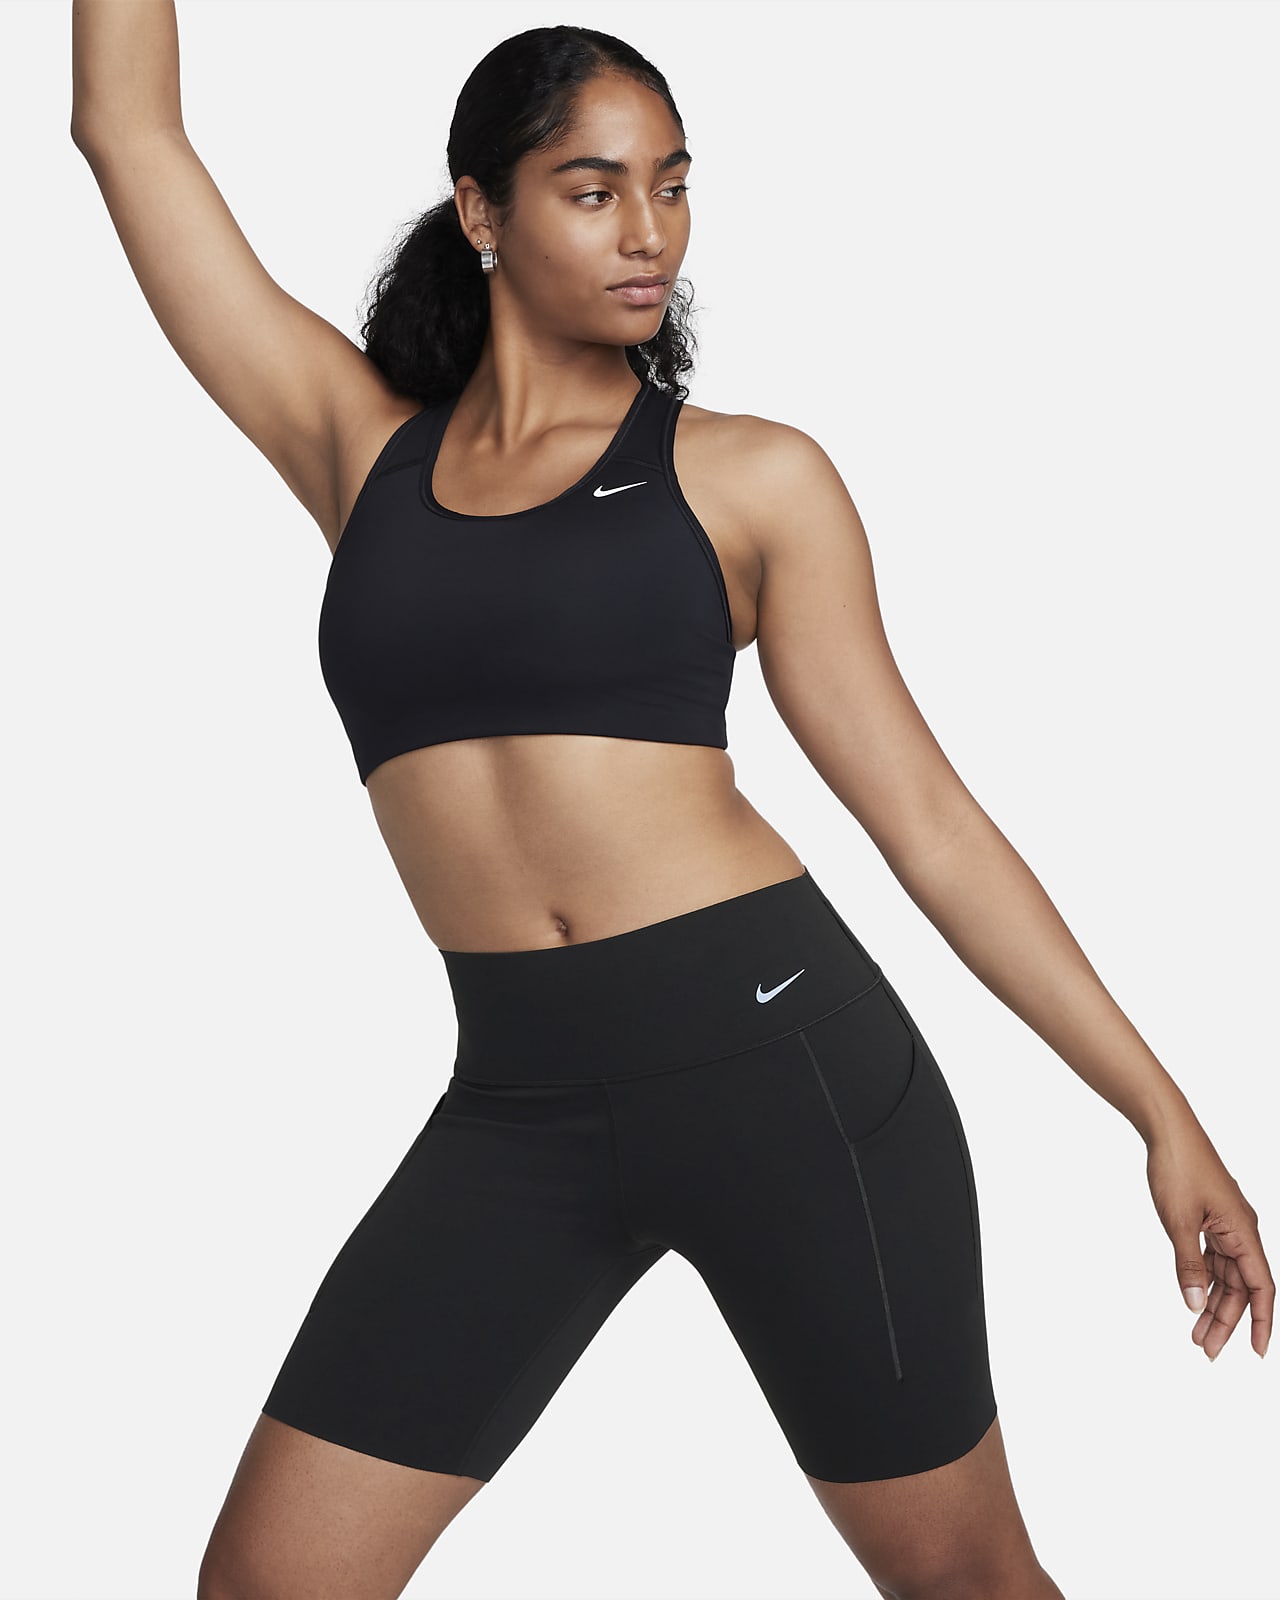 Nike Universa-cykelshorts med medium støtte, mellemhøj talje og lommer til kvinder